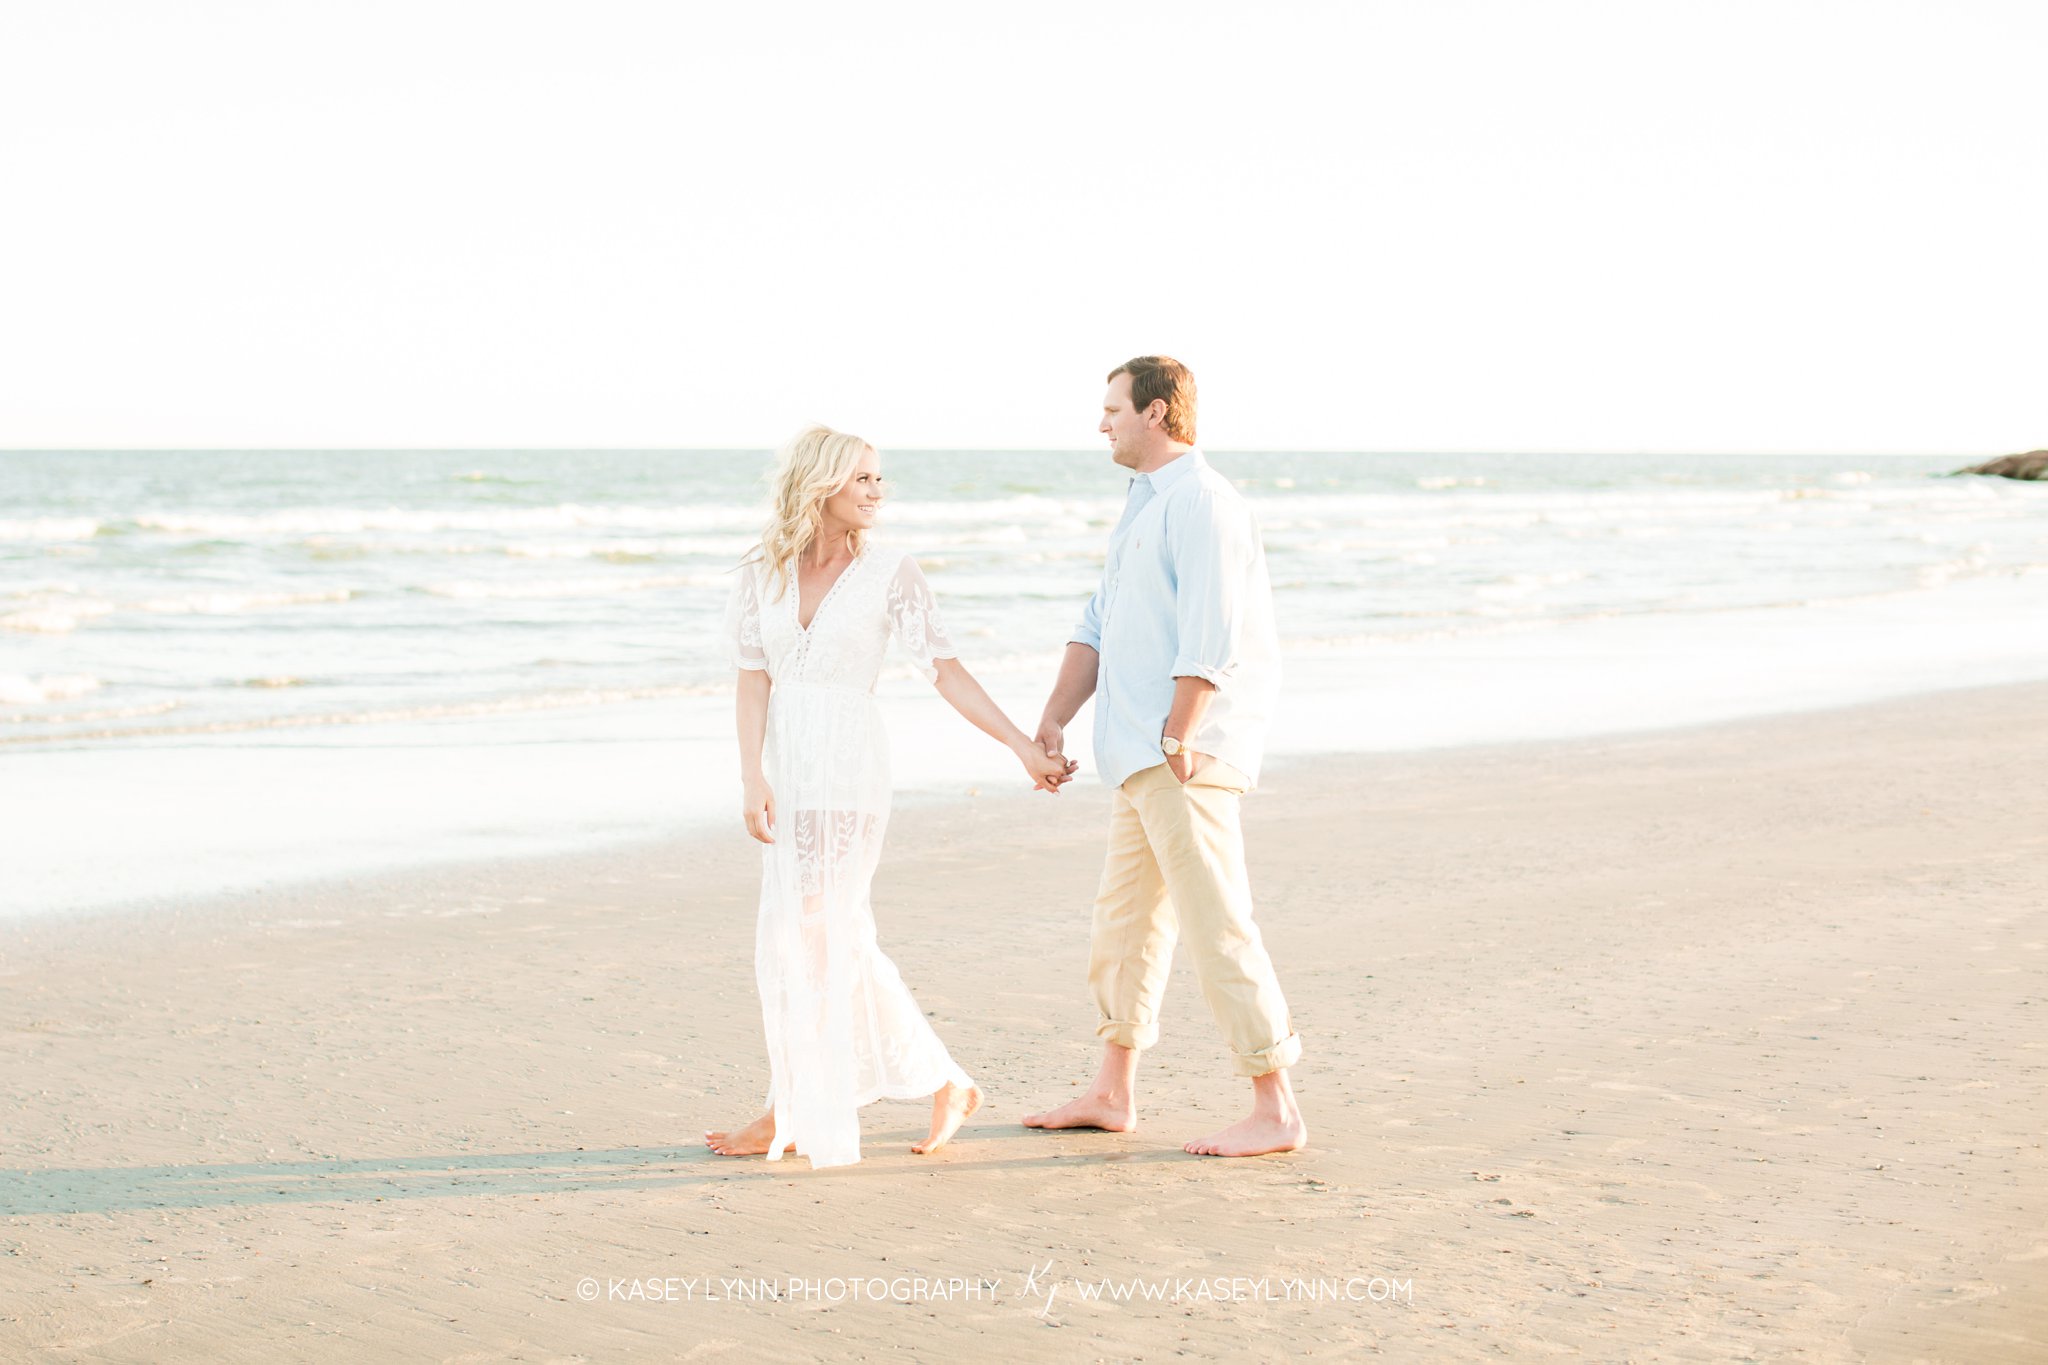 Galveston Engagement Session / Kasey Lynn Photography